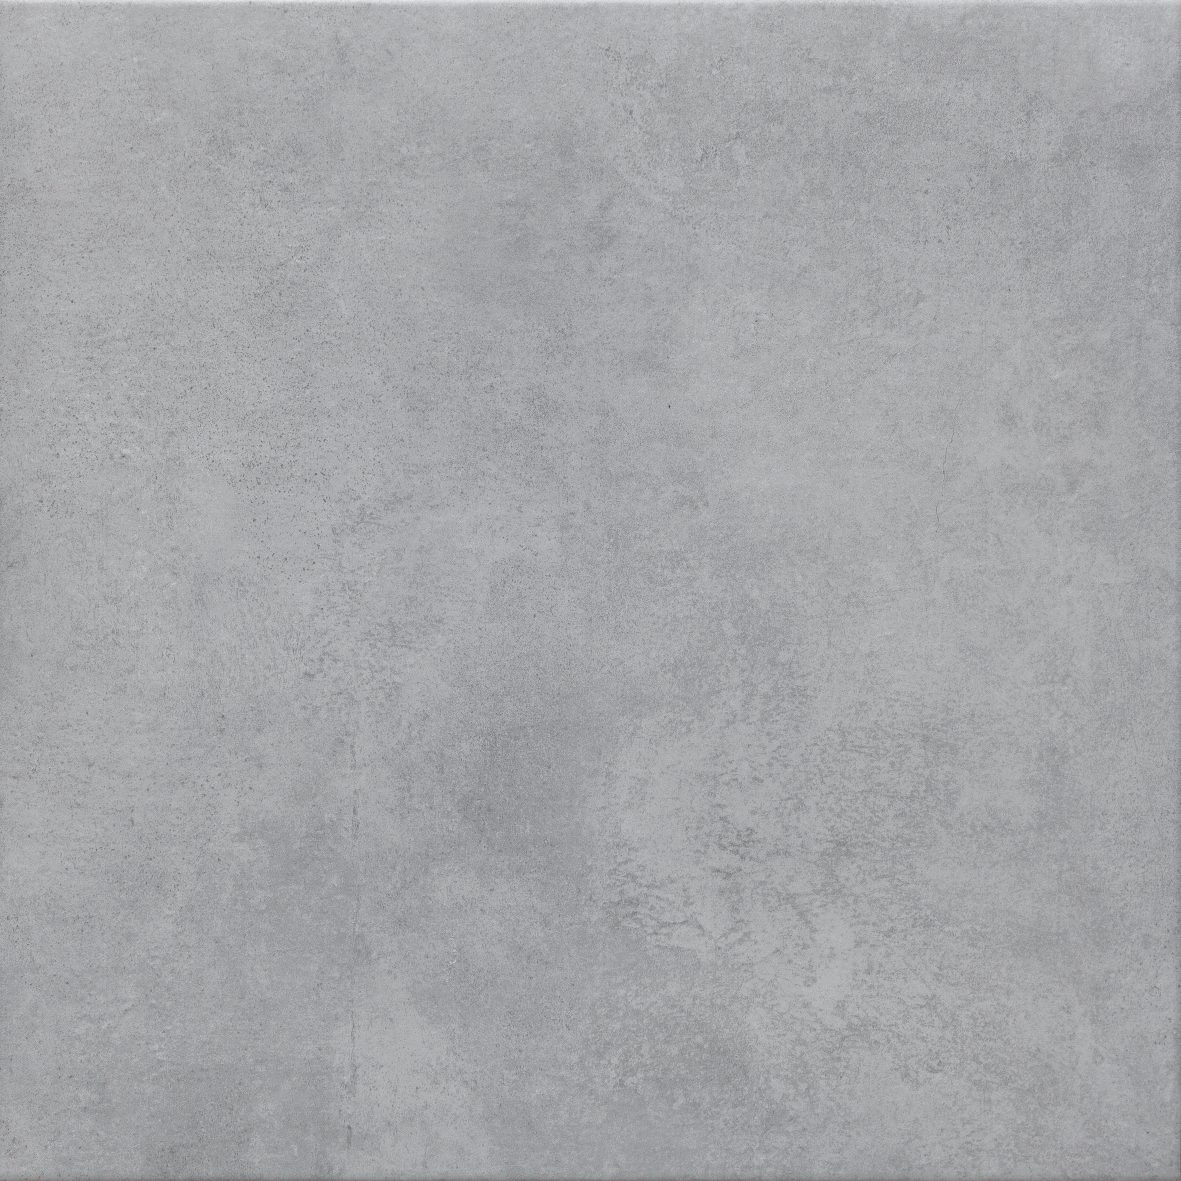 C2061 800mm x 800mm light grey porcelain tile - The Tile Warehouse